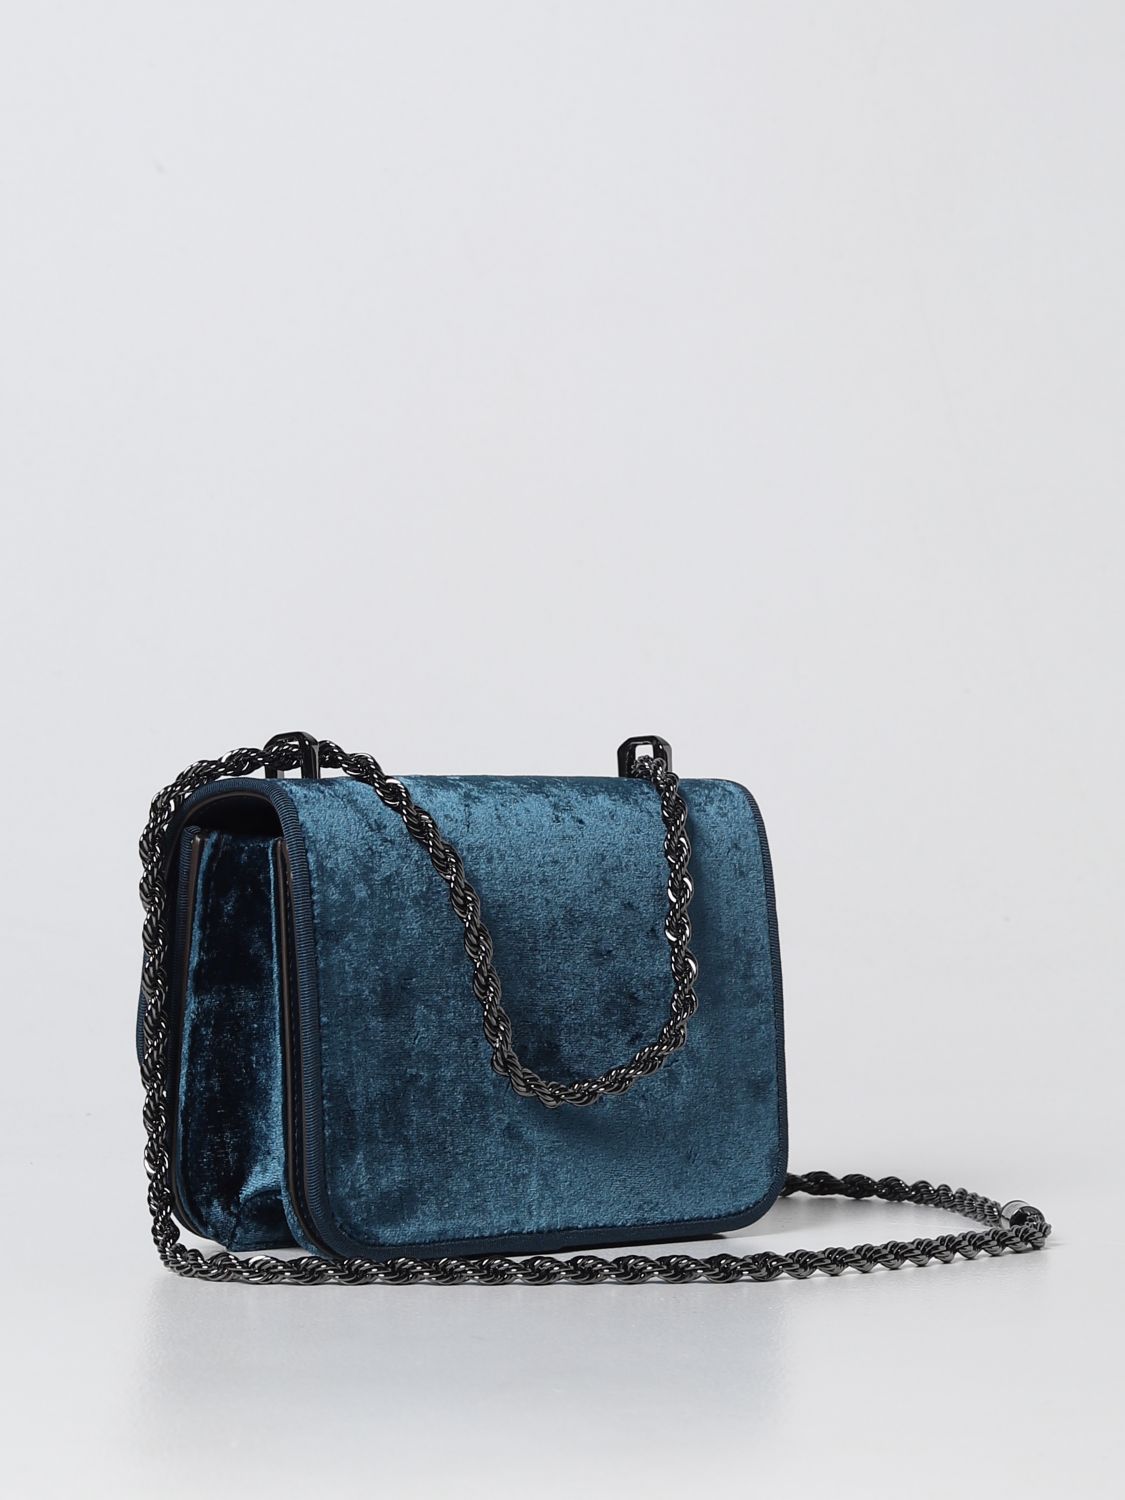 TORY BURCH: mini bag for woman - Turquoise | Tory Burch mini bag 147880  online on 